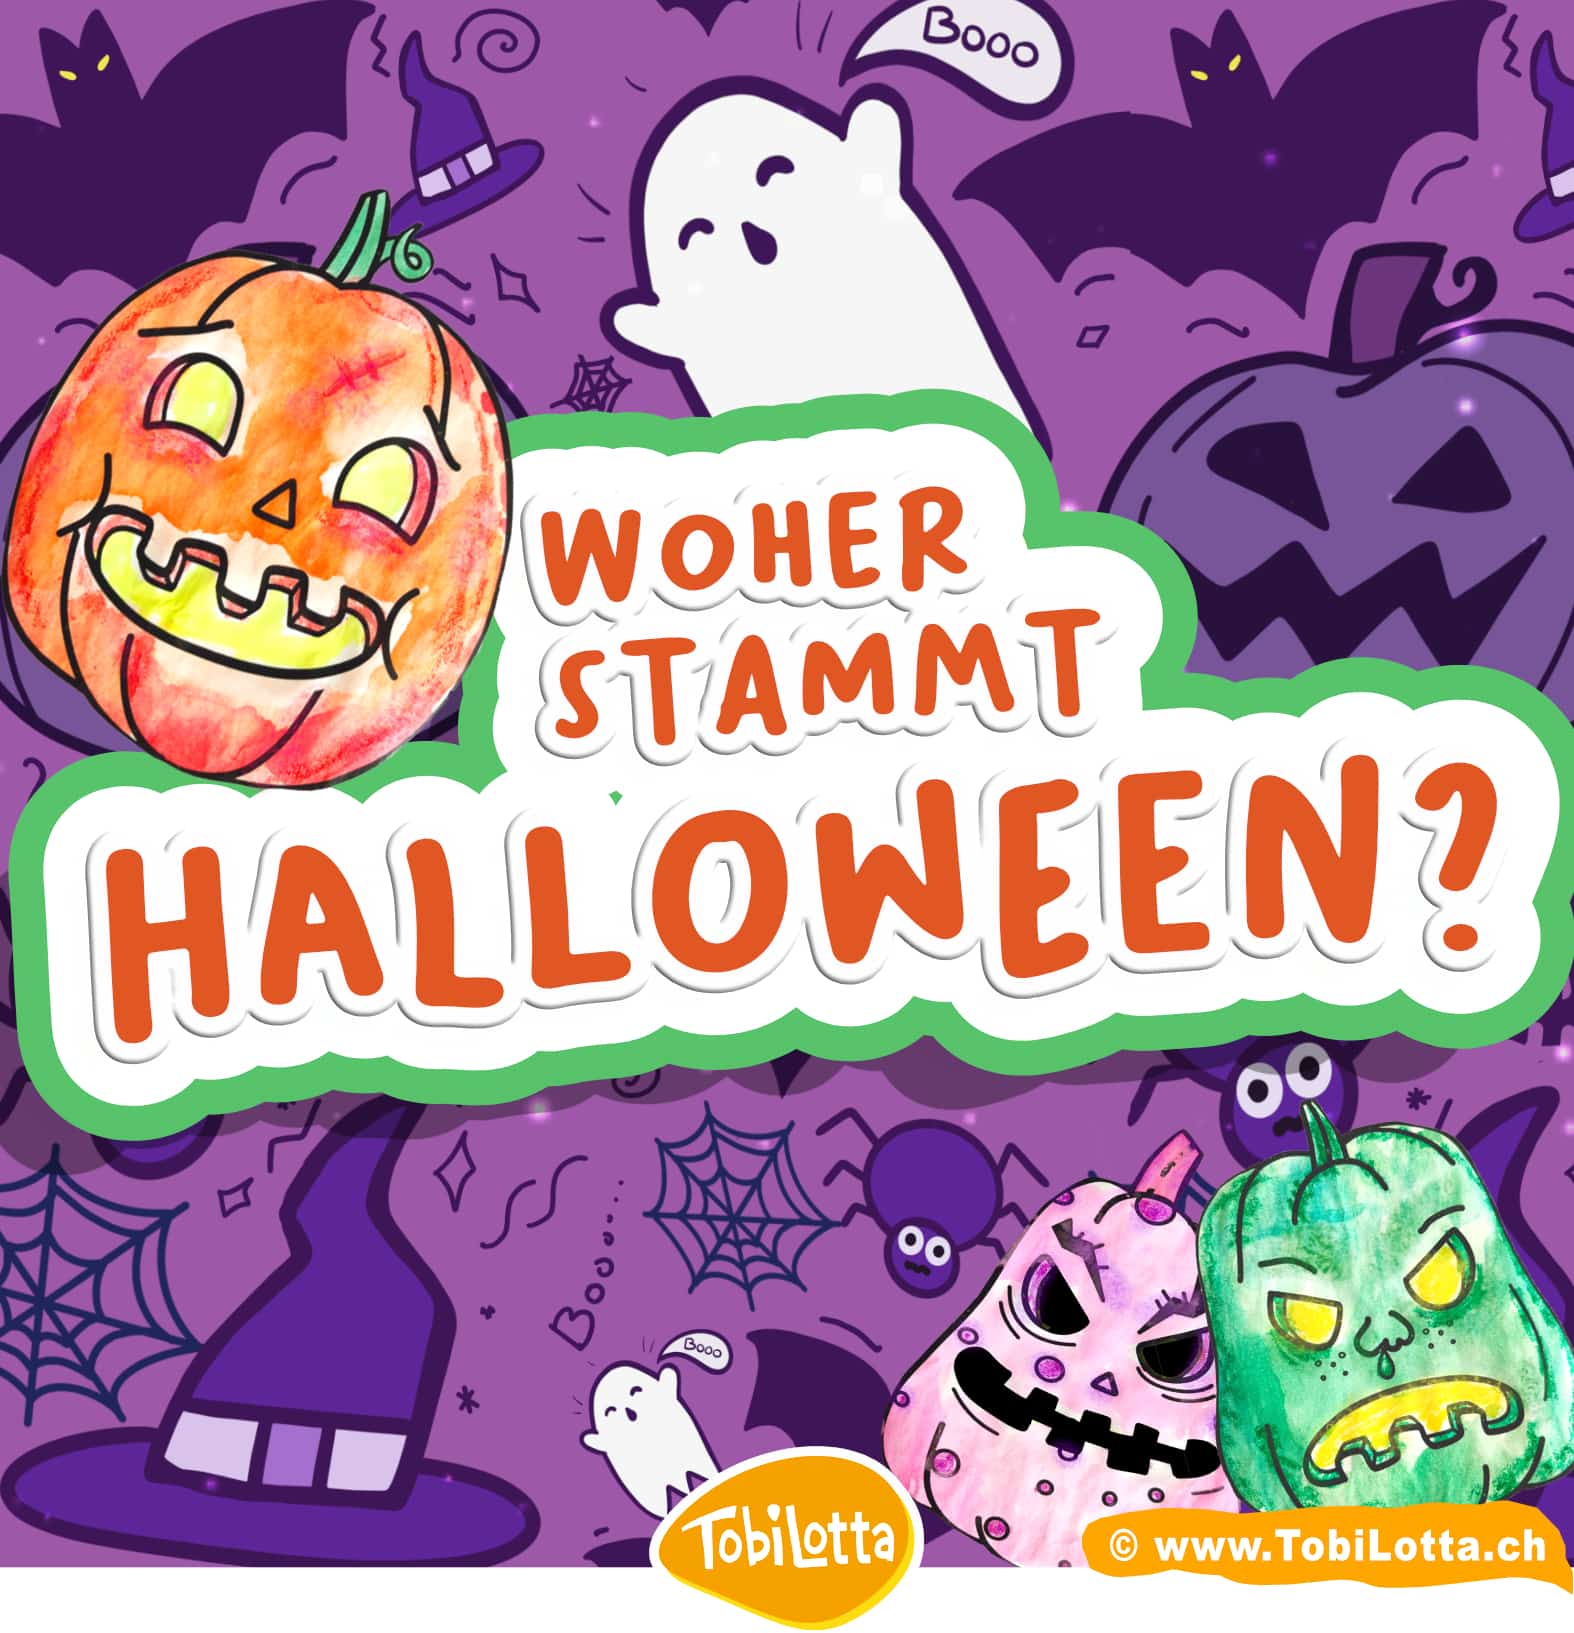 woher stammt halloween warum feiert man halloween was bedeutet halloween?